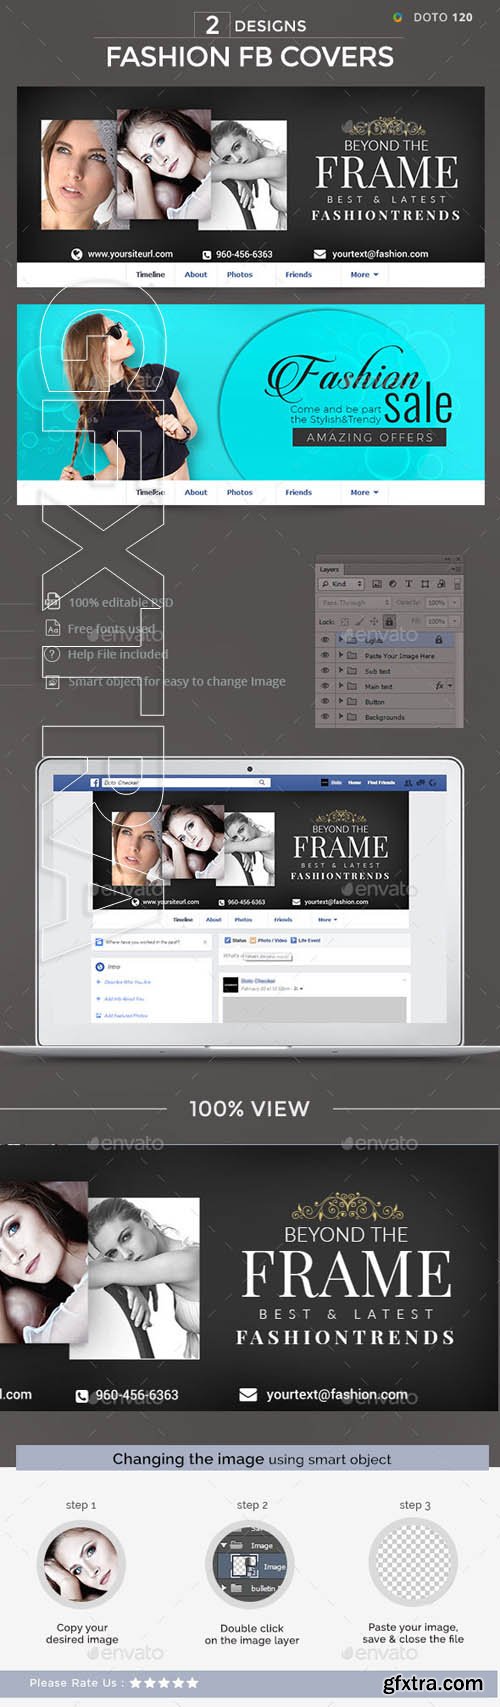 Graphicriver - Fashion Facebook Covers - 2 Designs 20293516